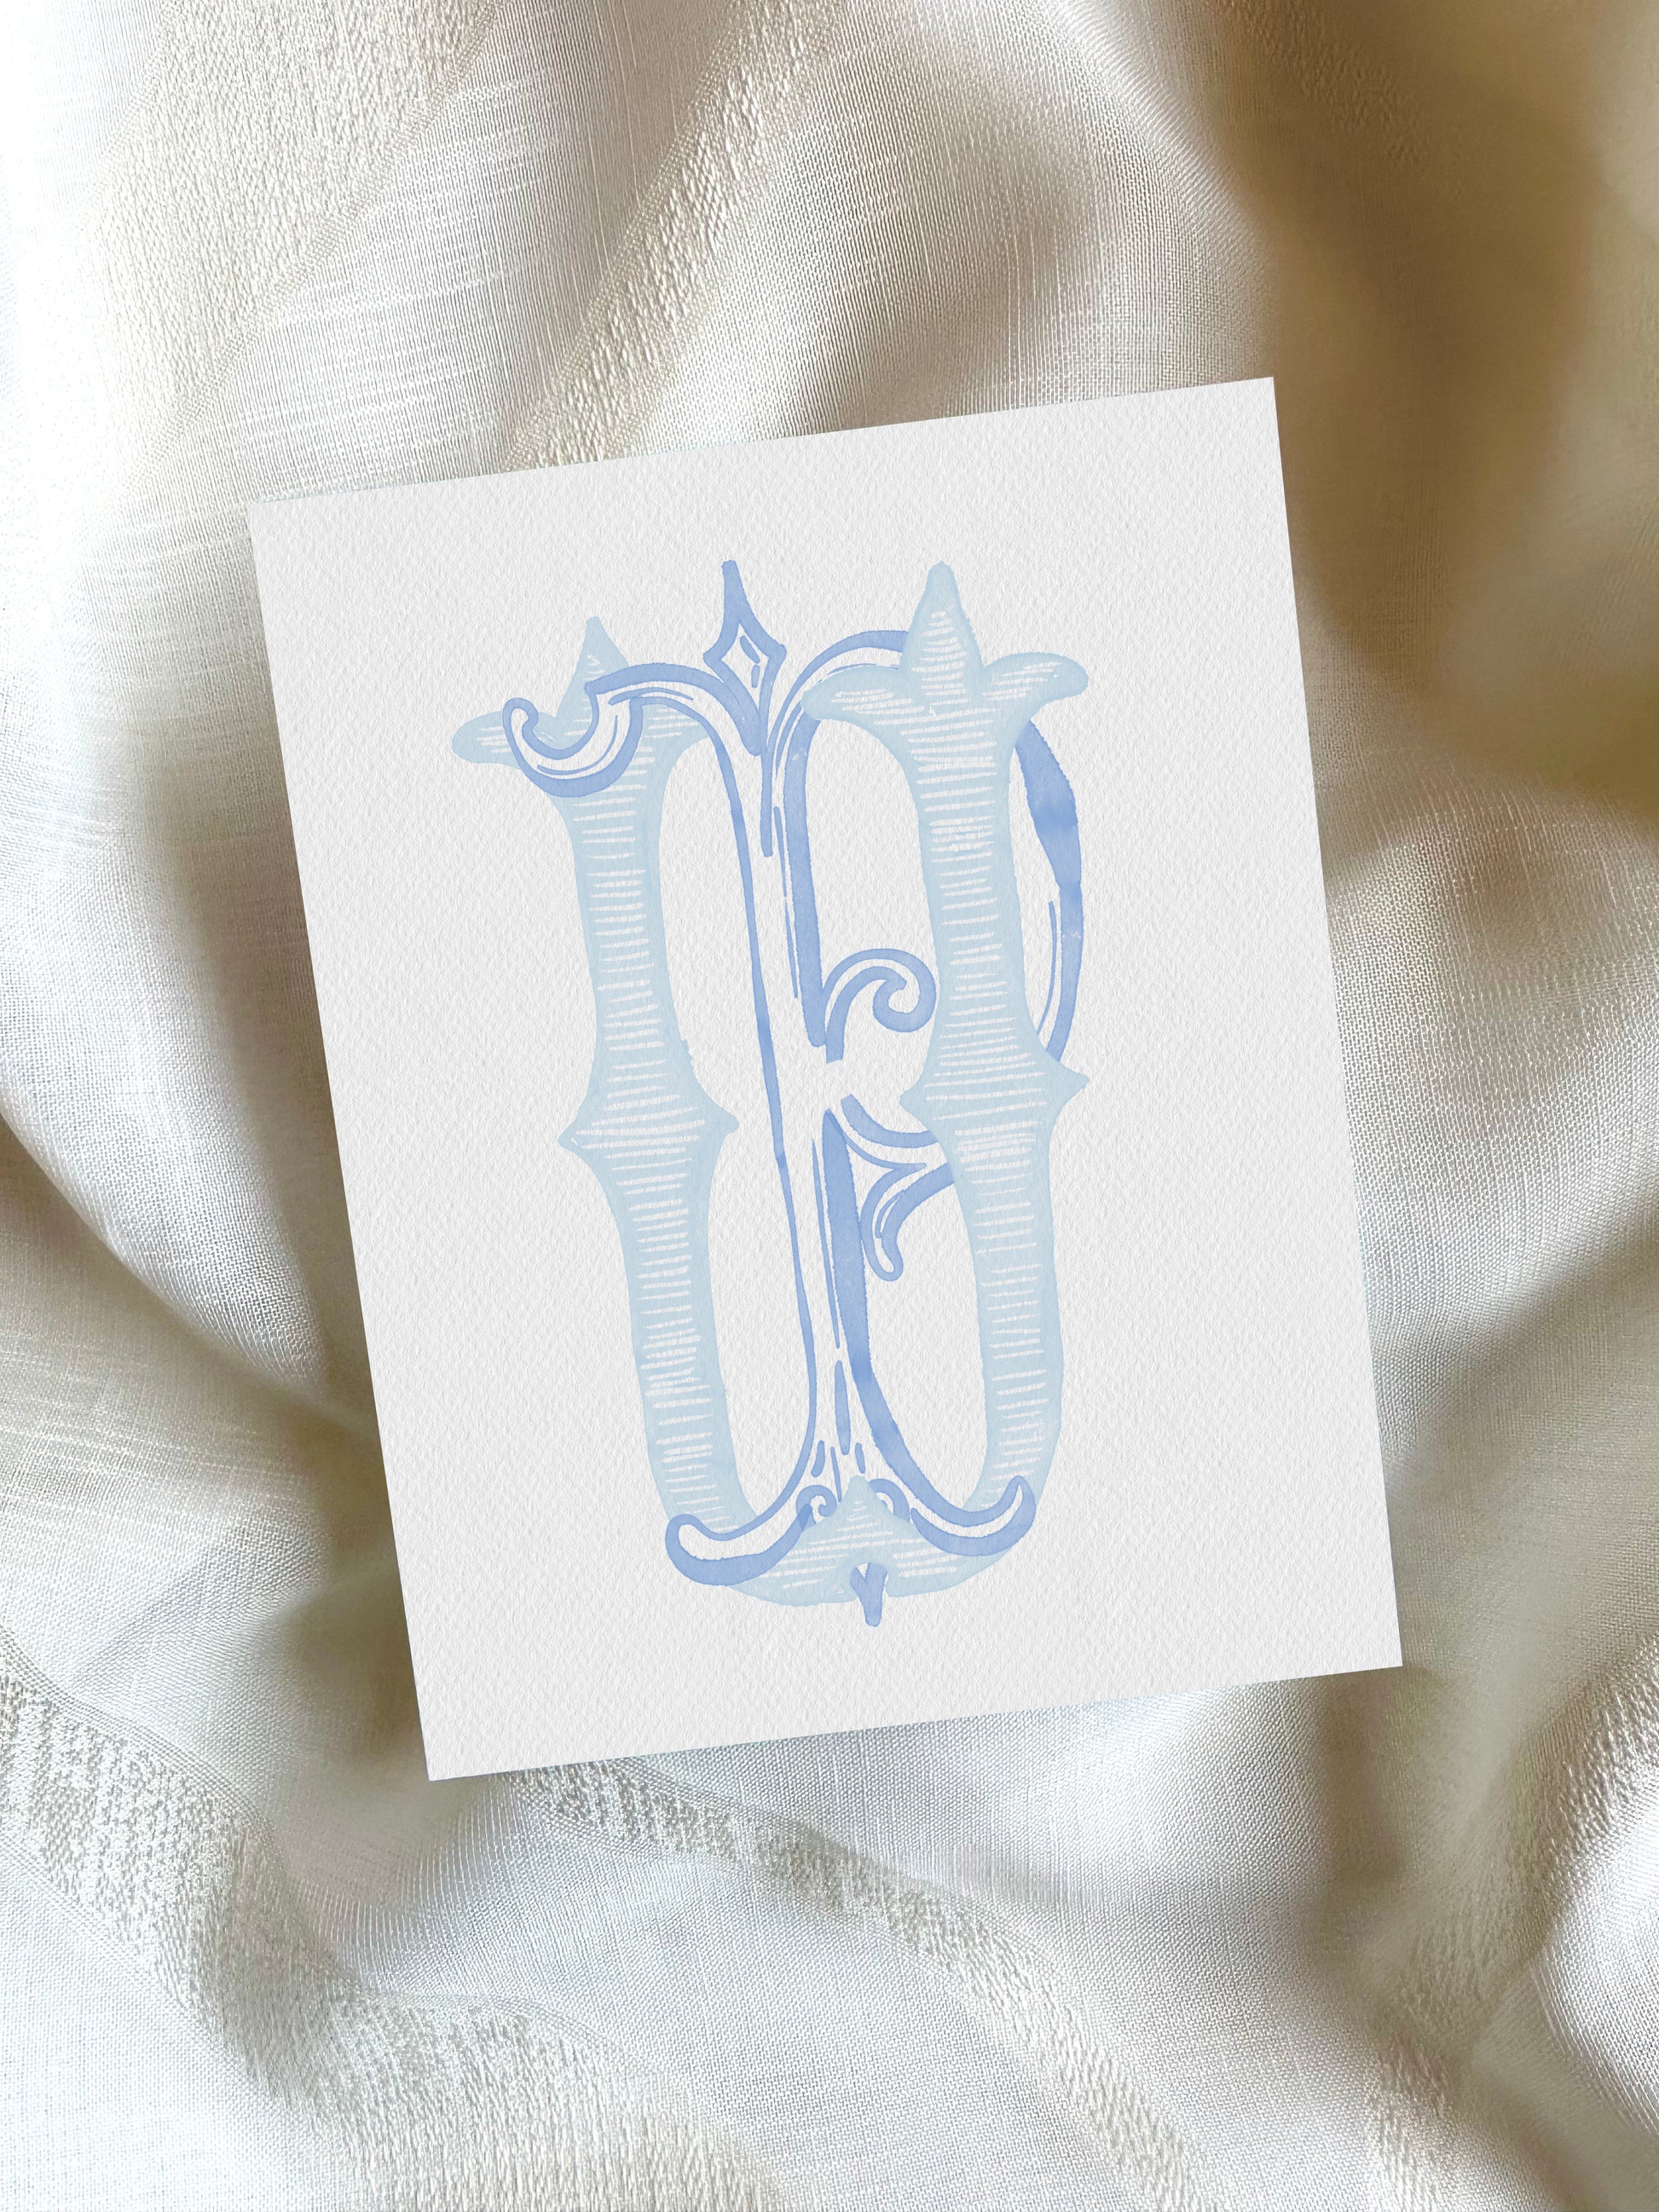 2 Letter Monogram with Letters PU UP | Digital Download - Wedding Monogram SVG, Personal Logo, Wedding Logo for Wedding Invitations The Wedding Crest Lab